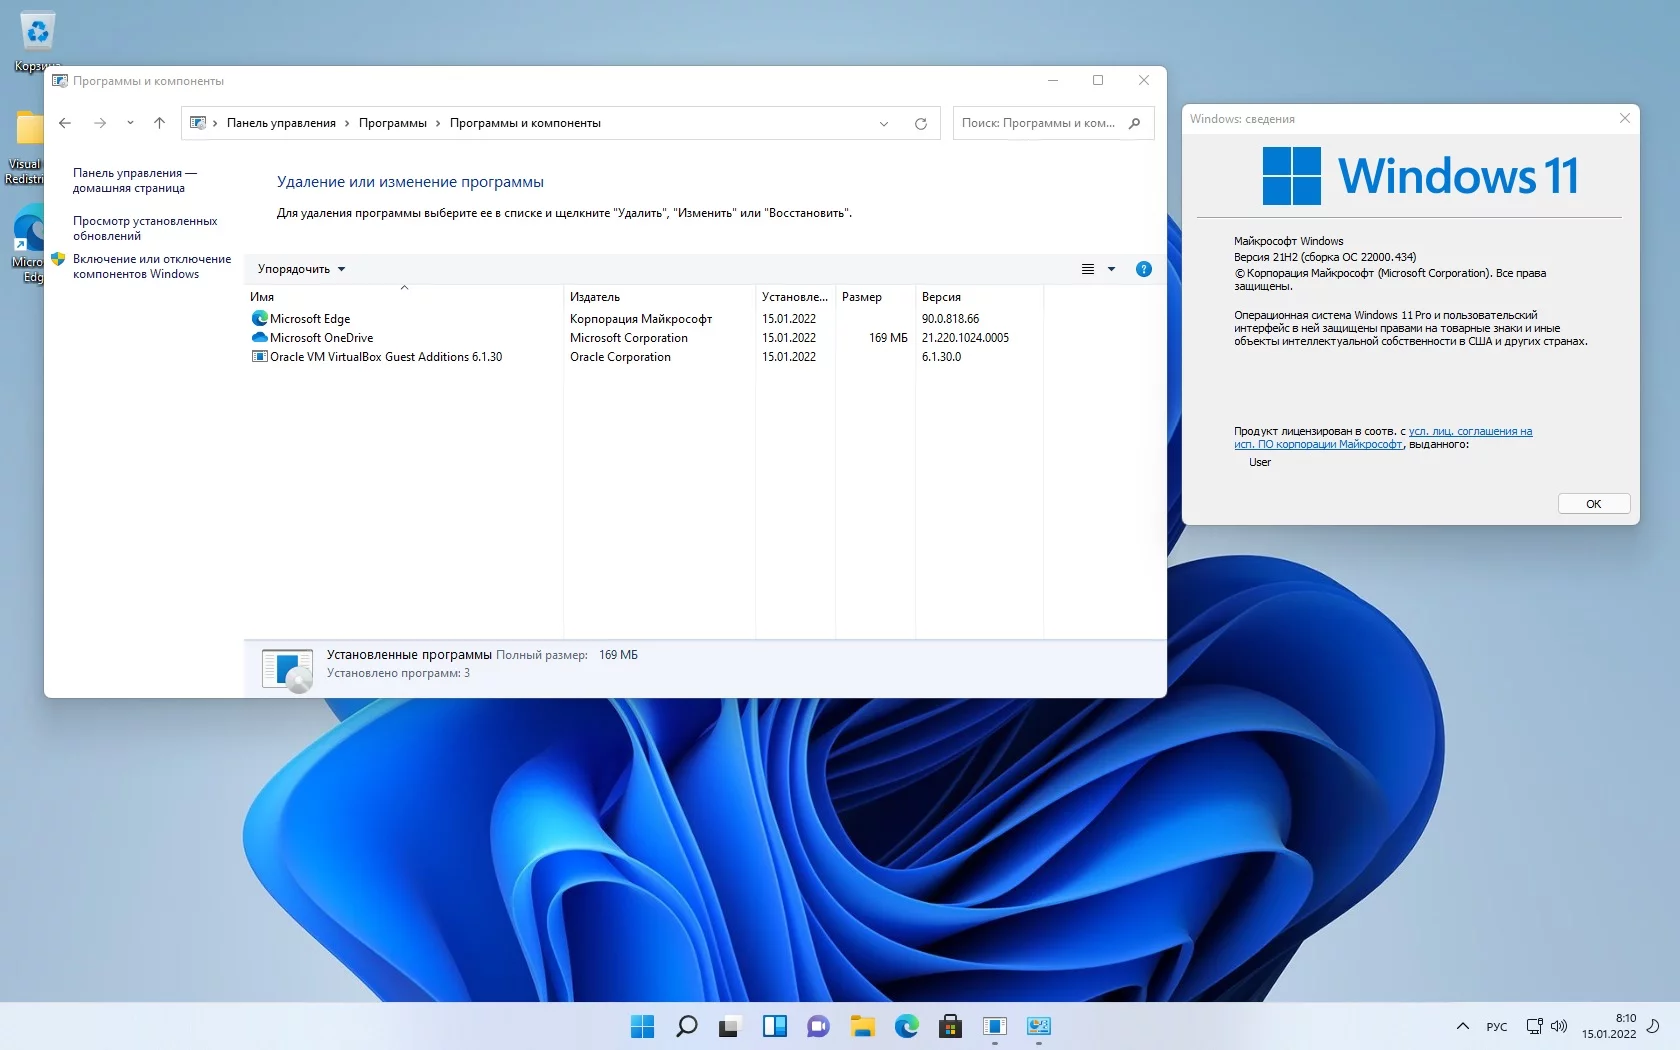 Windows 11 21Н2 (Build 22000.434) (20in1) (x64) by Sergei Strelec